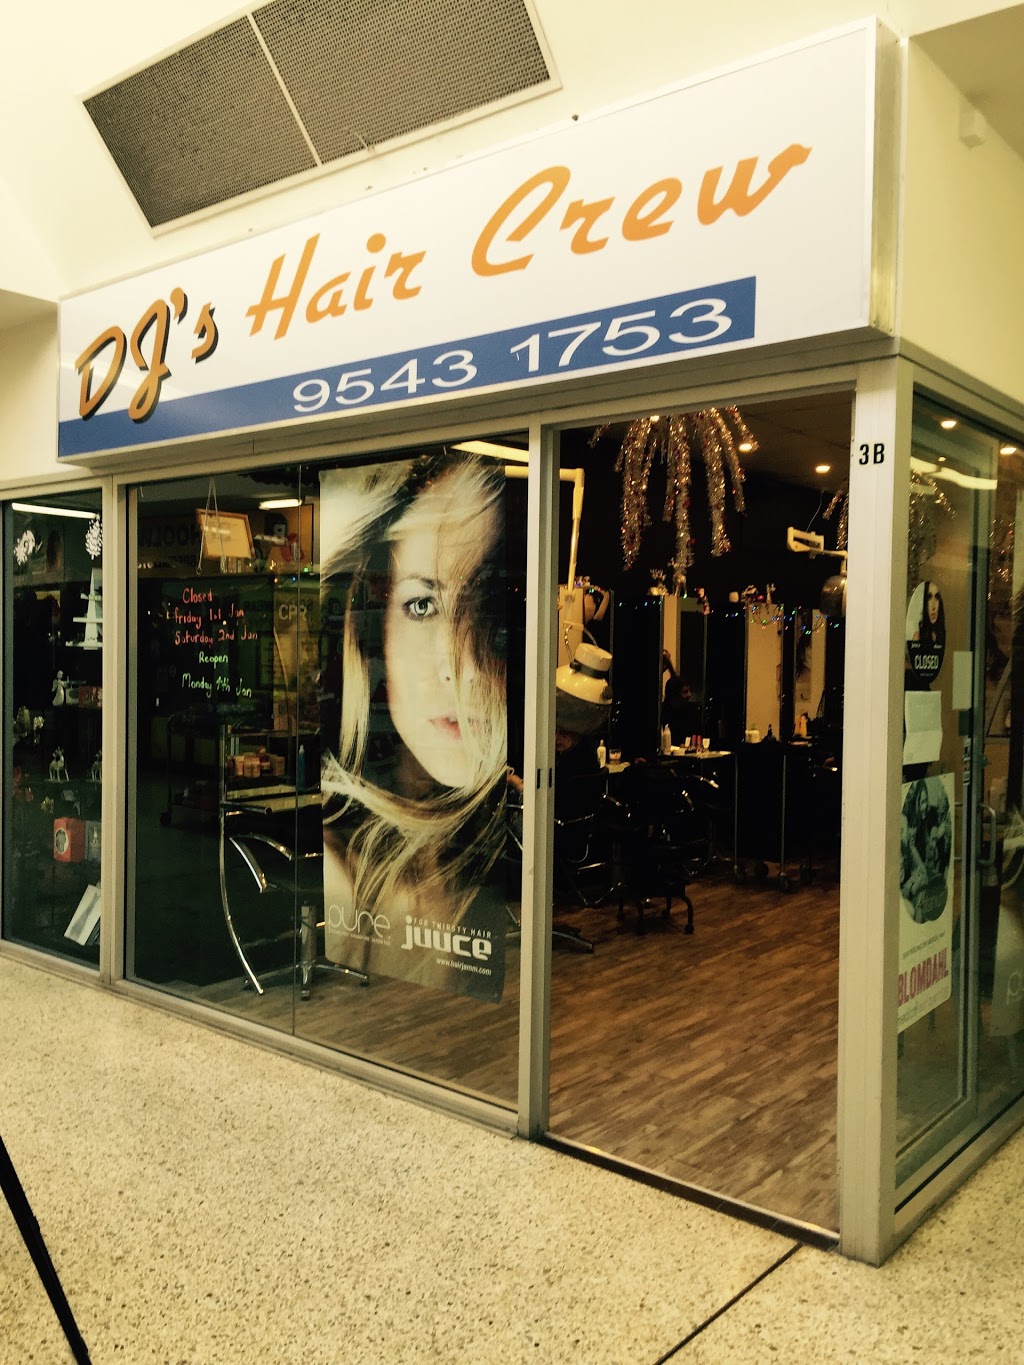 DJs Hair Crew | Bangor Shopping Centre 3 Yala Rd &, Menai Rd, Bangor NSW 2234, Australia | Phone: (02) 9543 1753